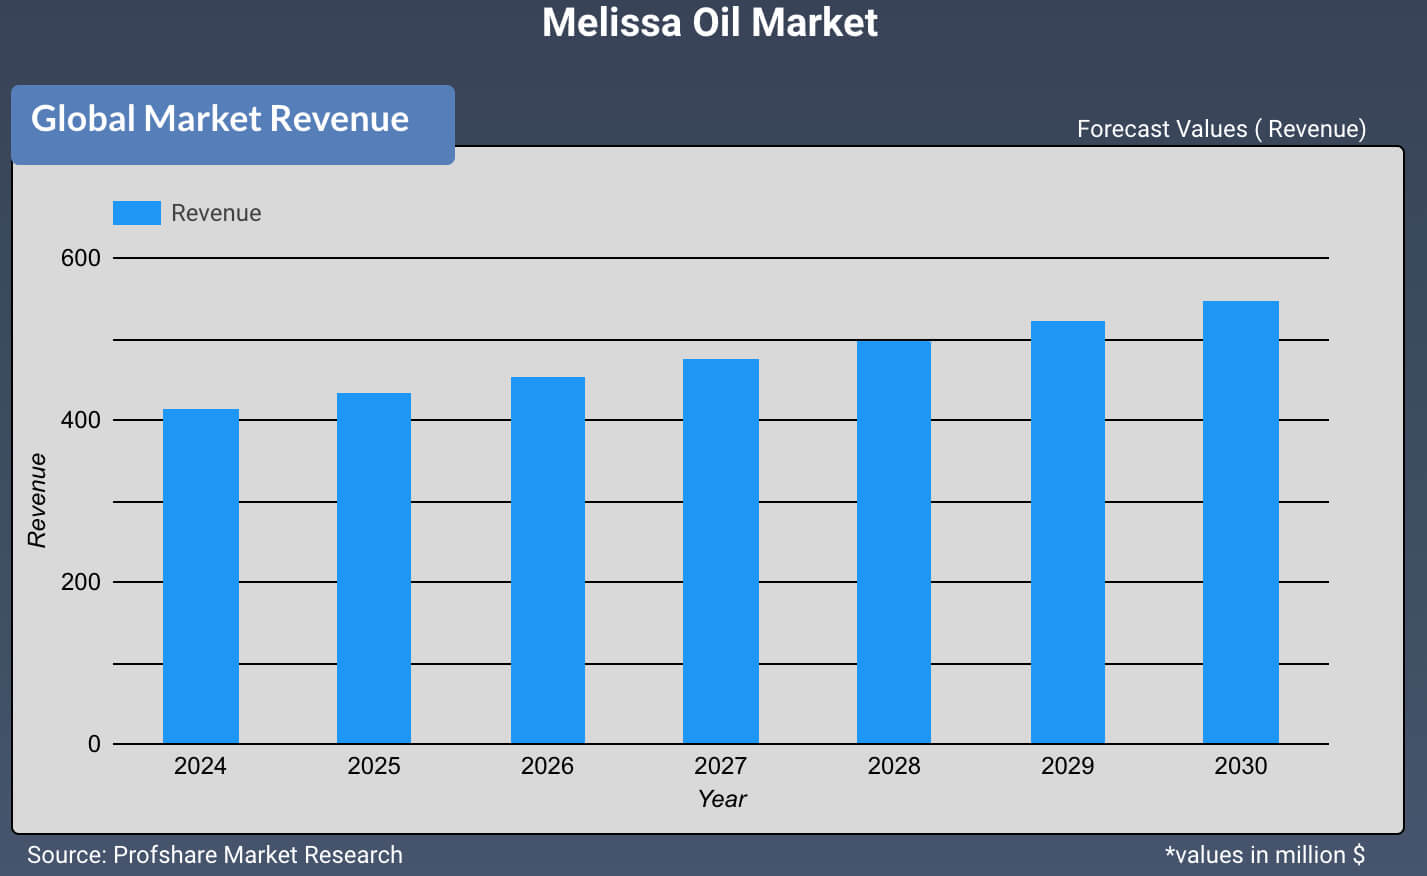 Melissa Oil Market